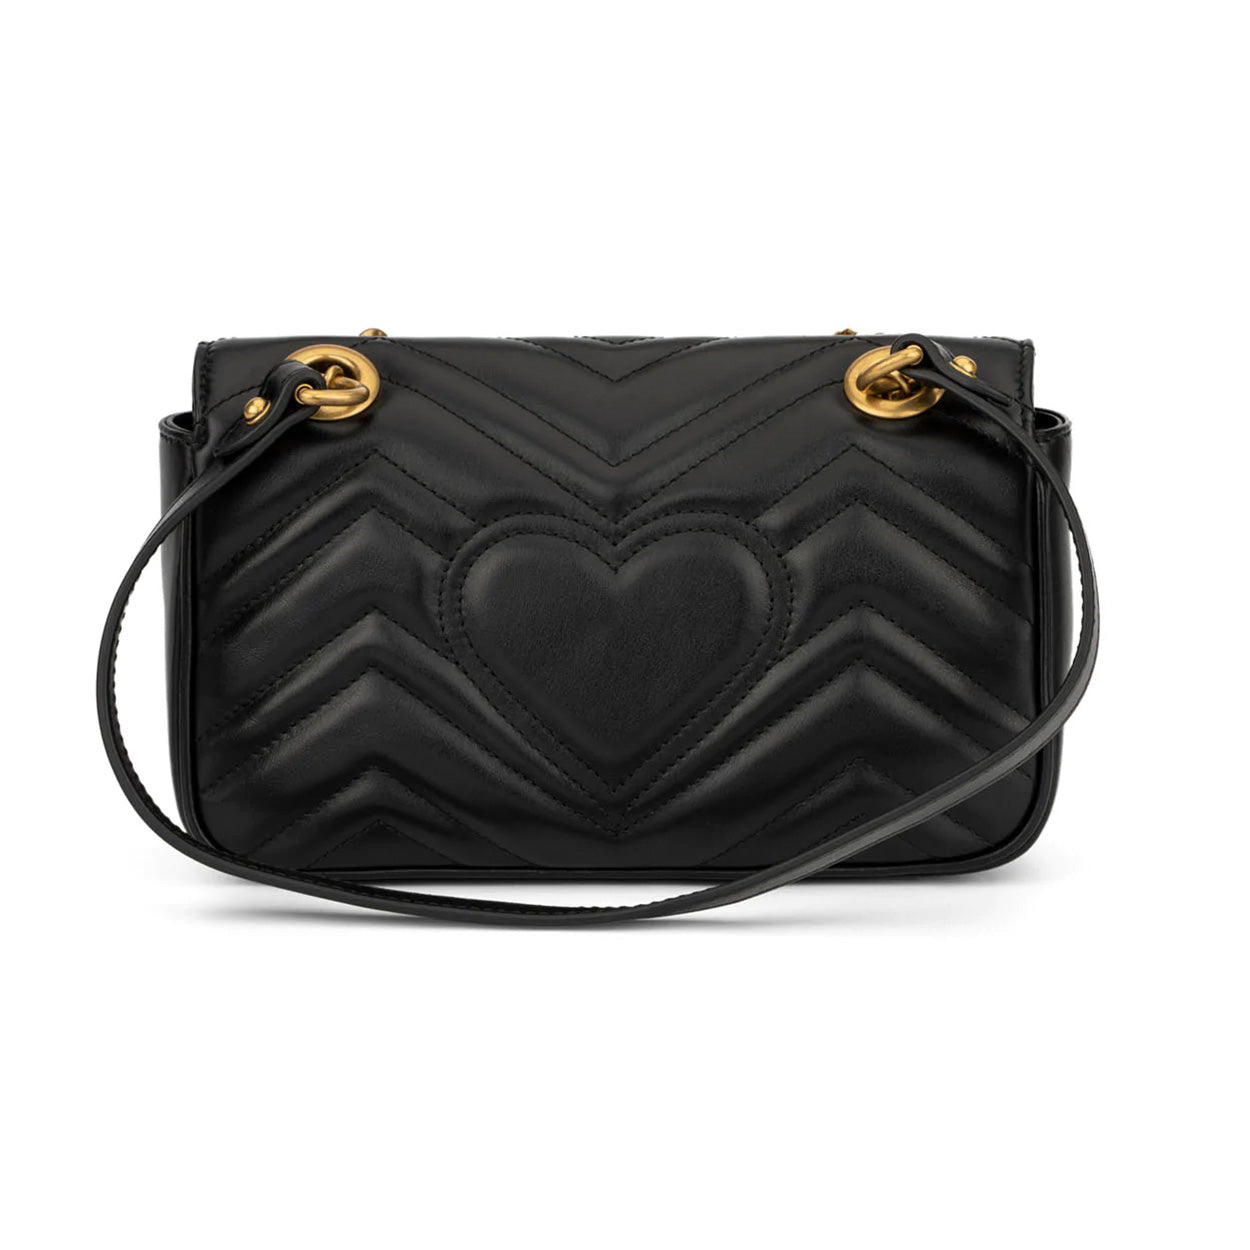 Gucci GG Marmont Matelasse Black Leather Mini Shoulder Bag 446744